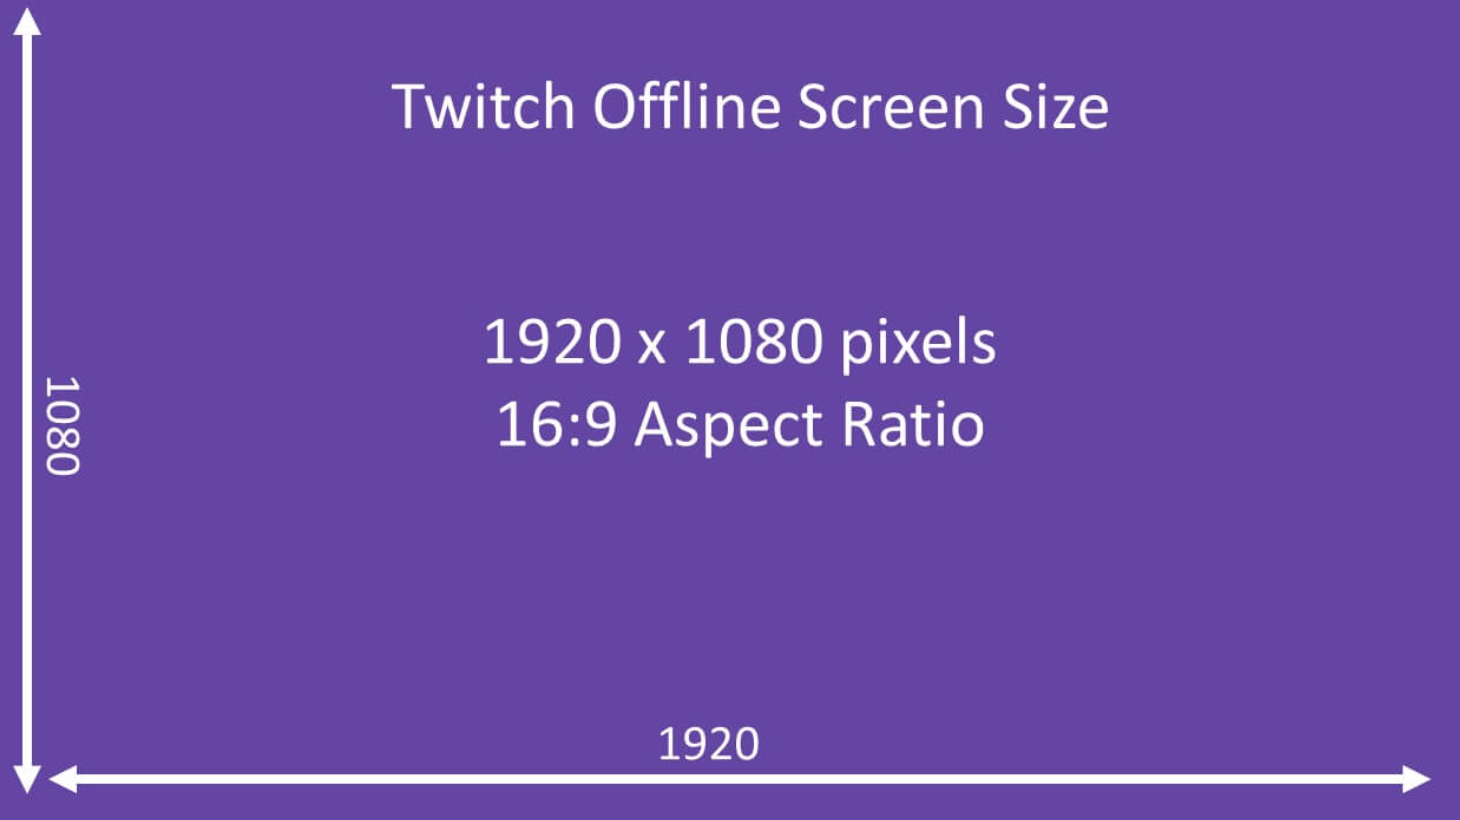 Twitch offline screen size